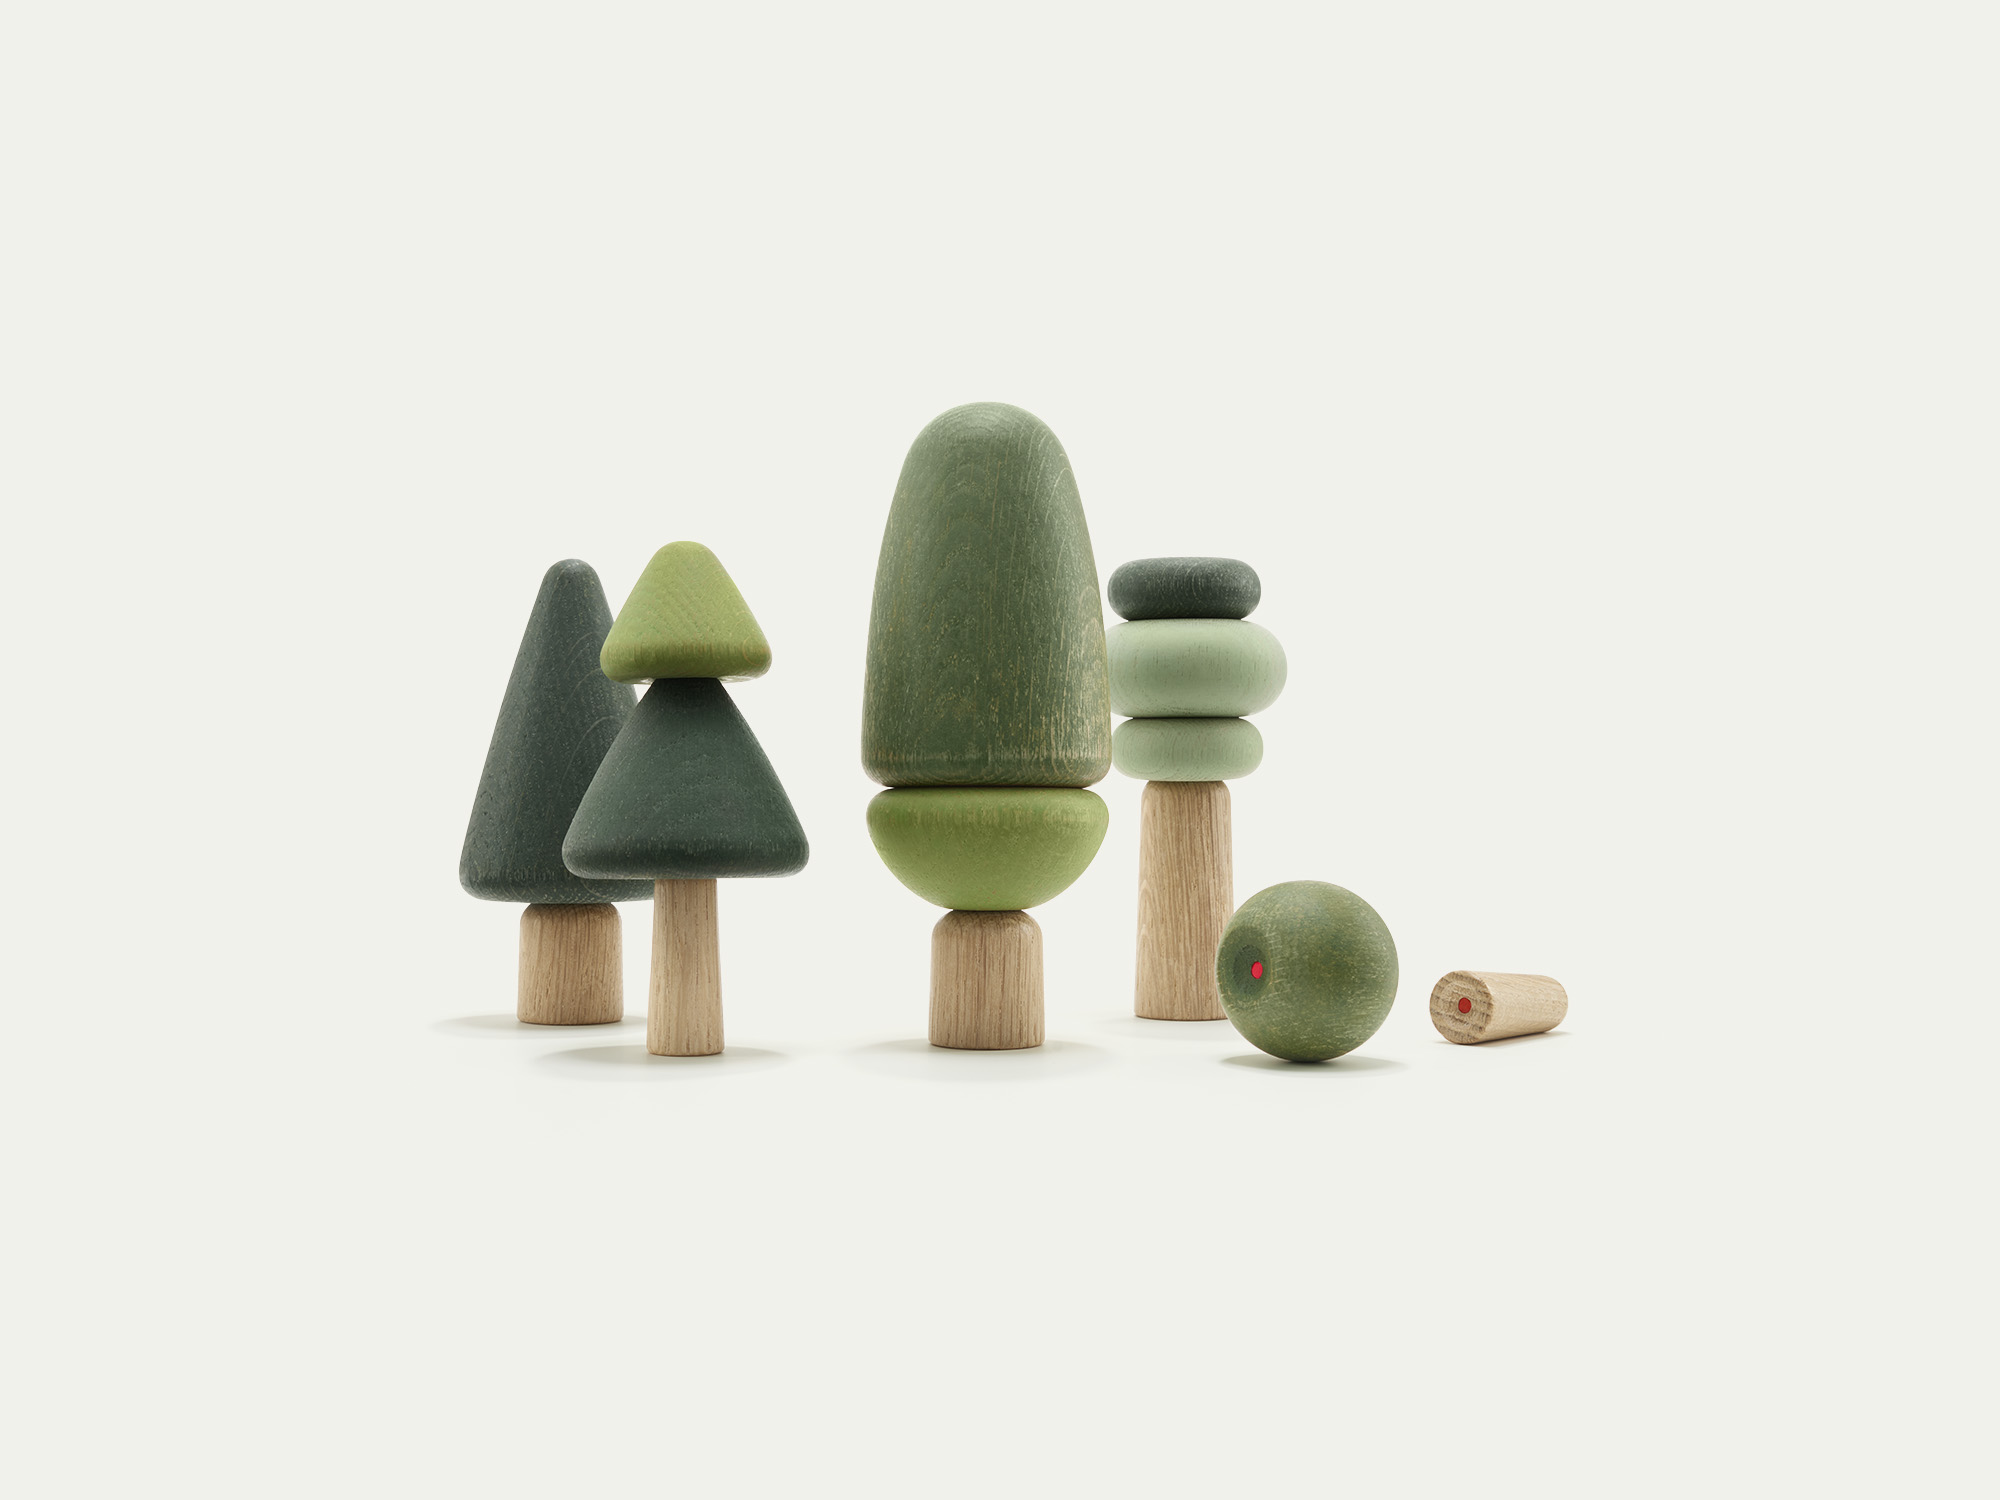 uuio tree wooden toys – available at STUDIO MINI